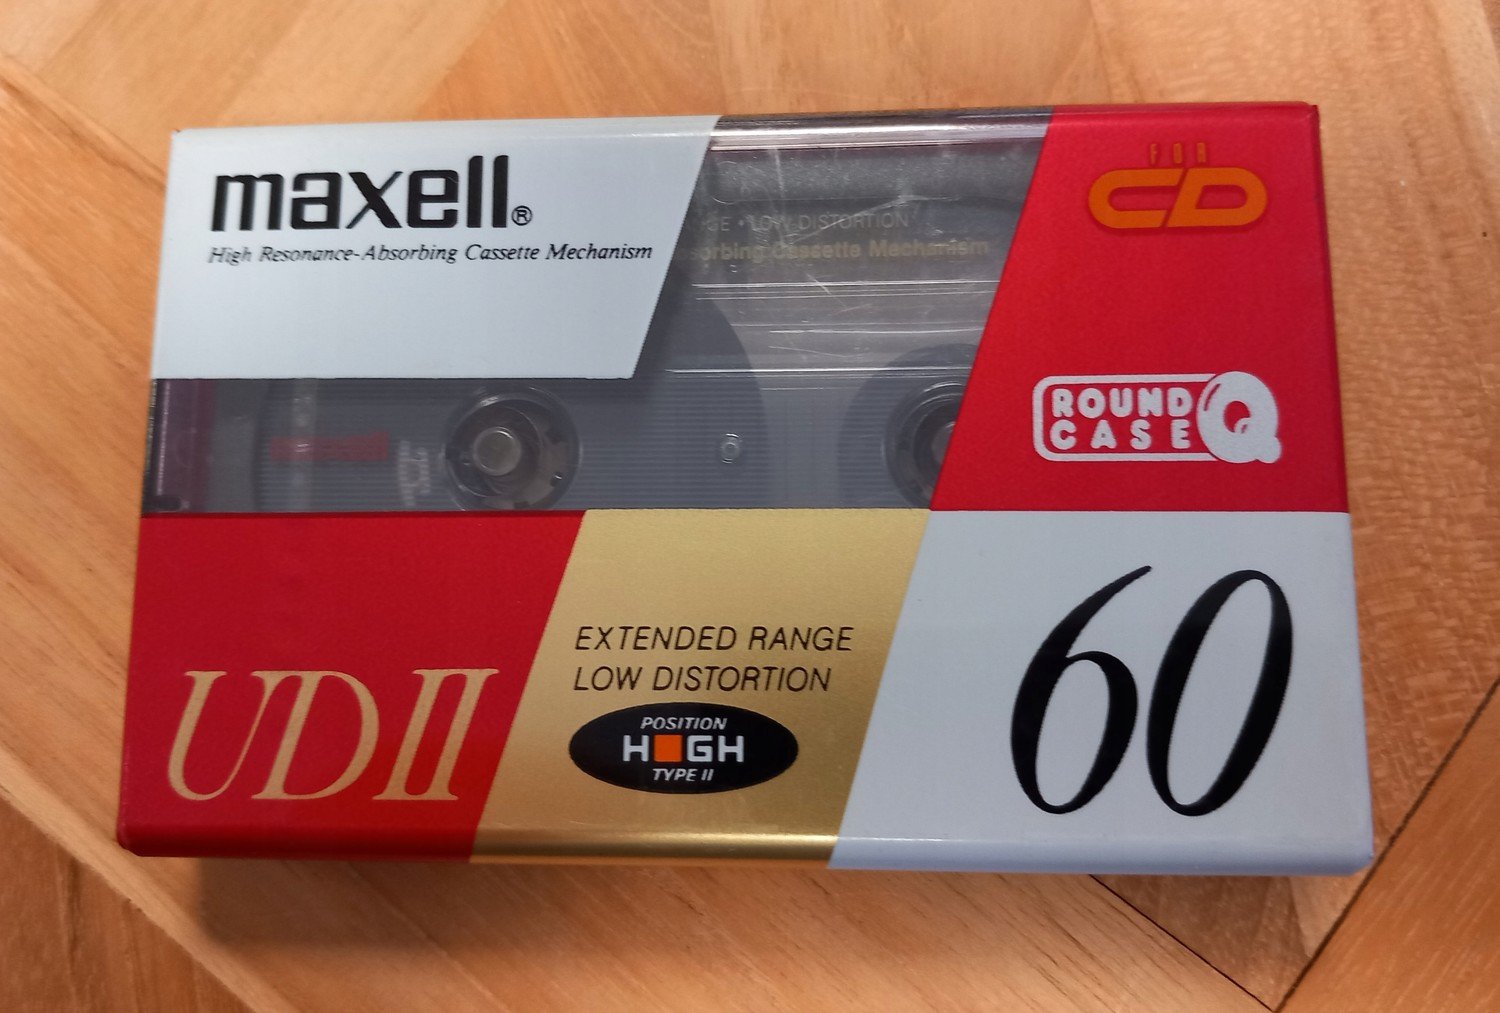 Maxell Udii 60 magnetofonová kazeta